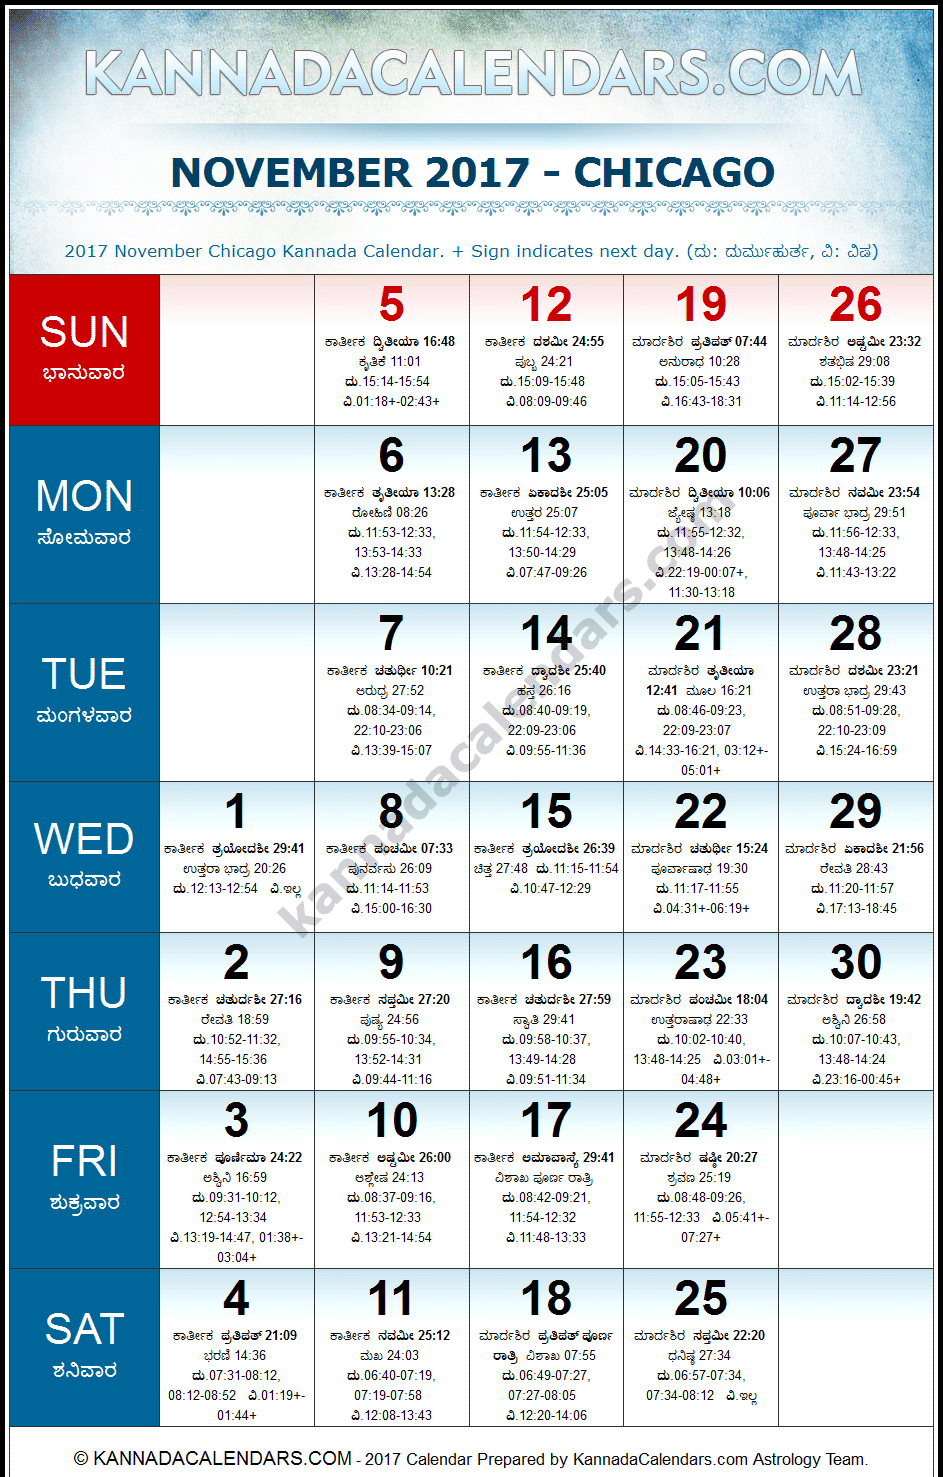 November 2017 Kannada Calendar for Chicago, USA